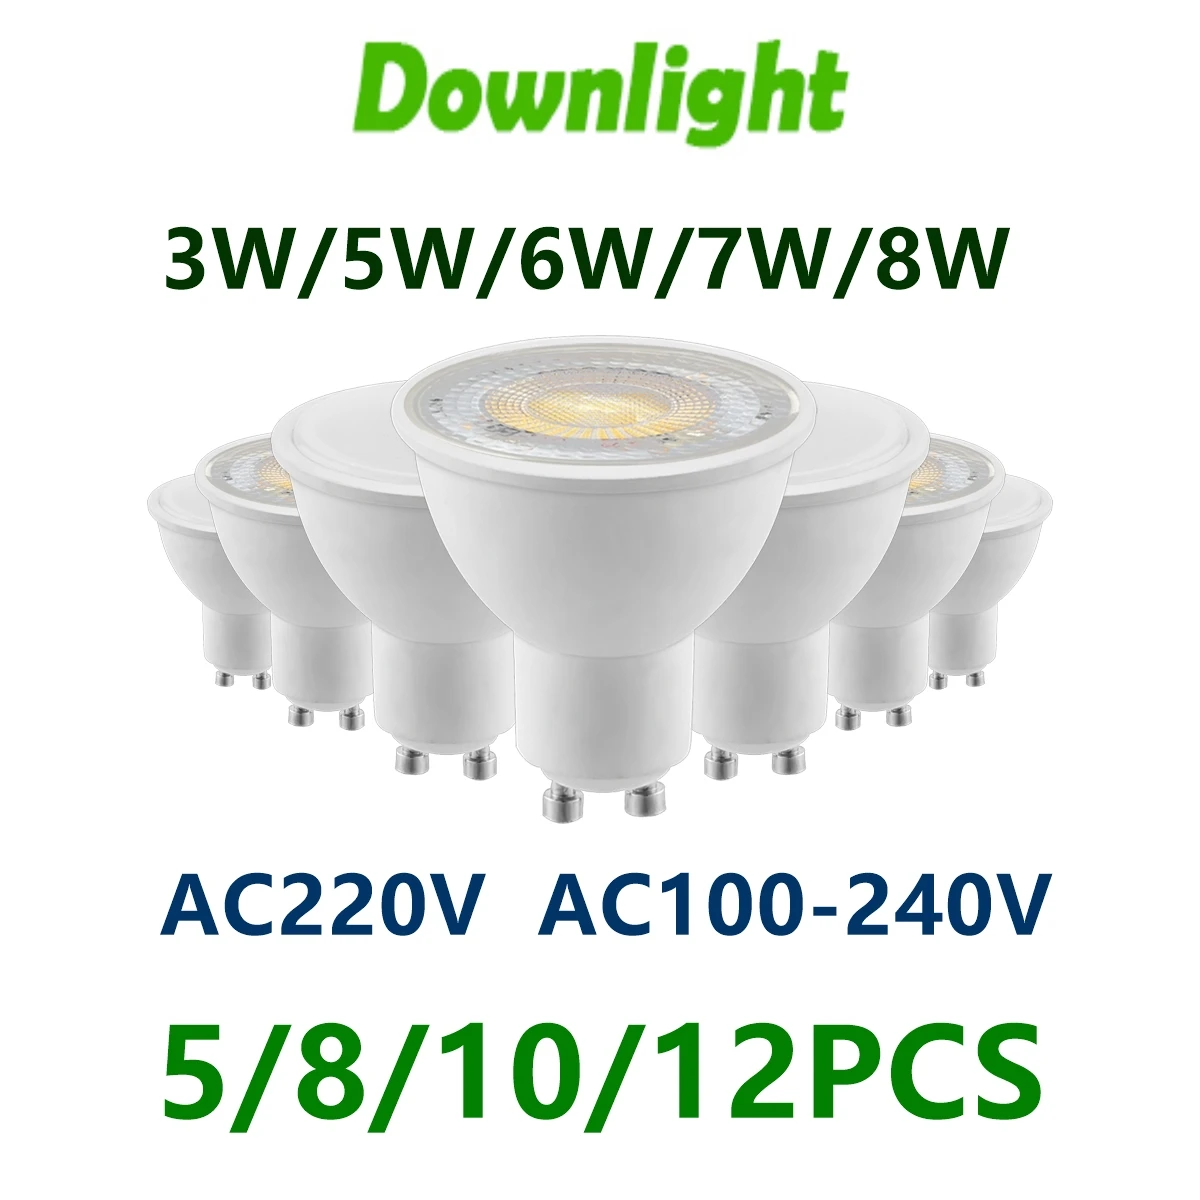 5-12PCS LED spot light GU10 AC220V AC120V LED lampadina a risparmio energetico 3W 5W 6W 7W 8W è possibile sostituire la lampada alogena da 50W